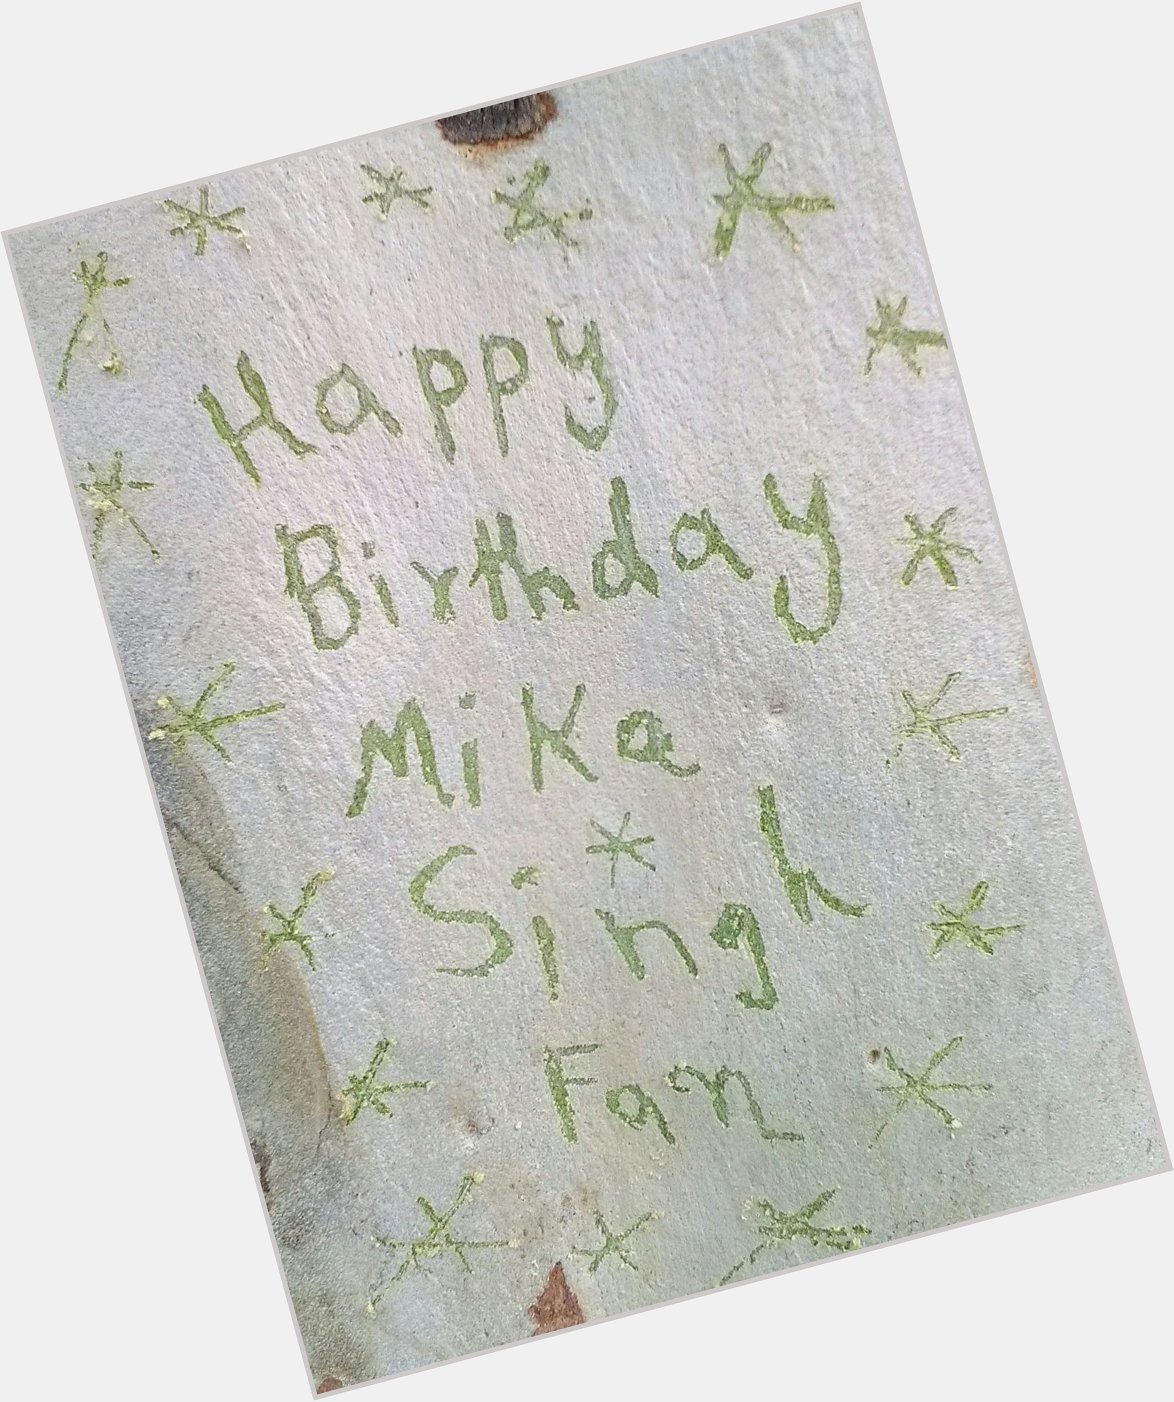 Happy birthday Mika Singh 